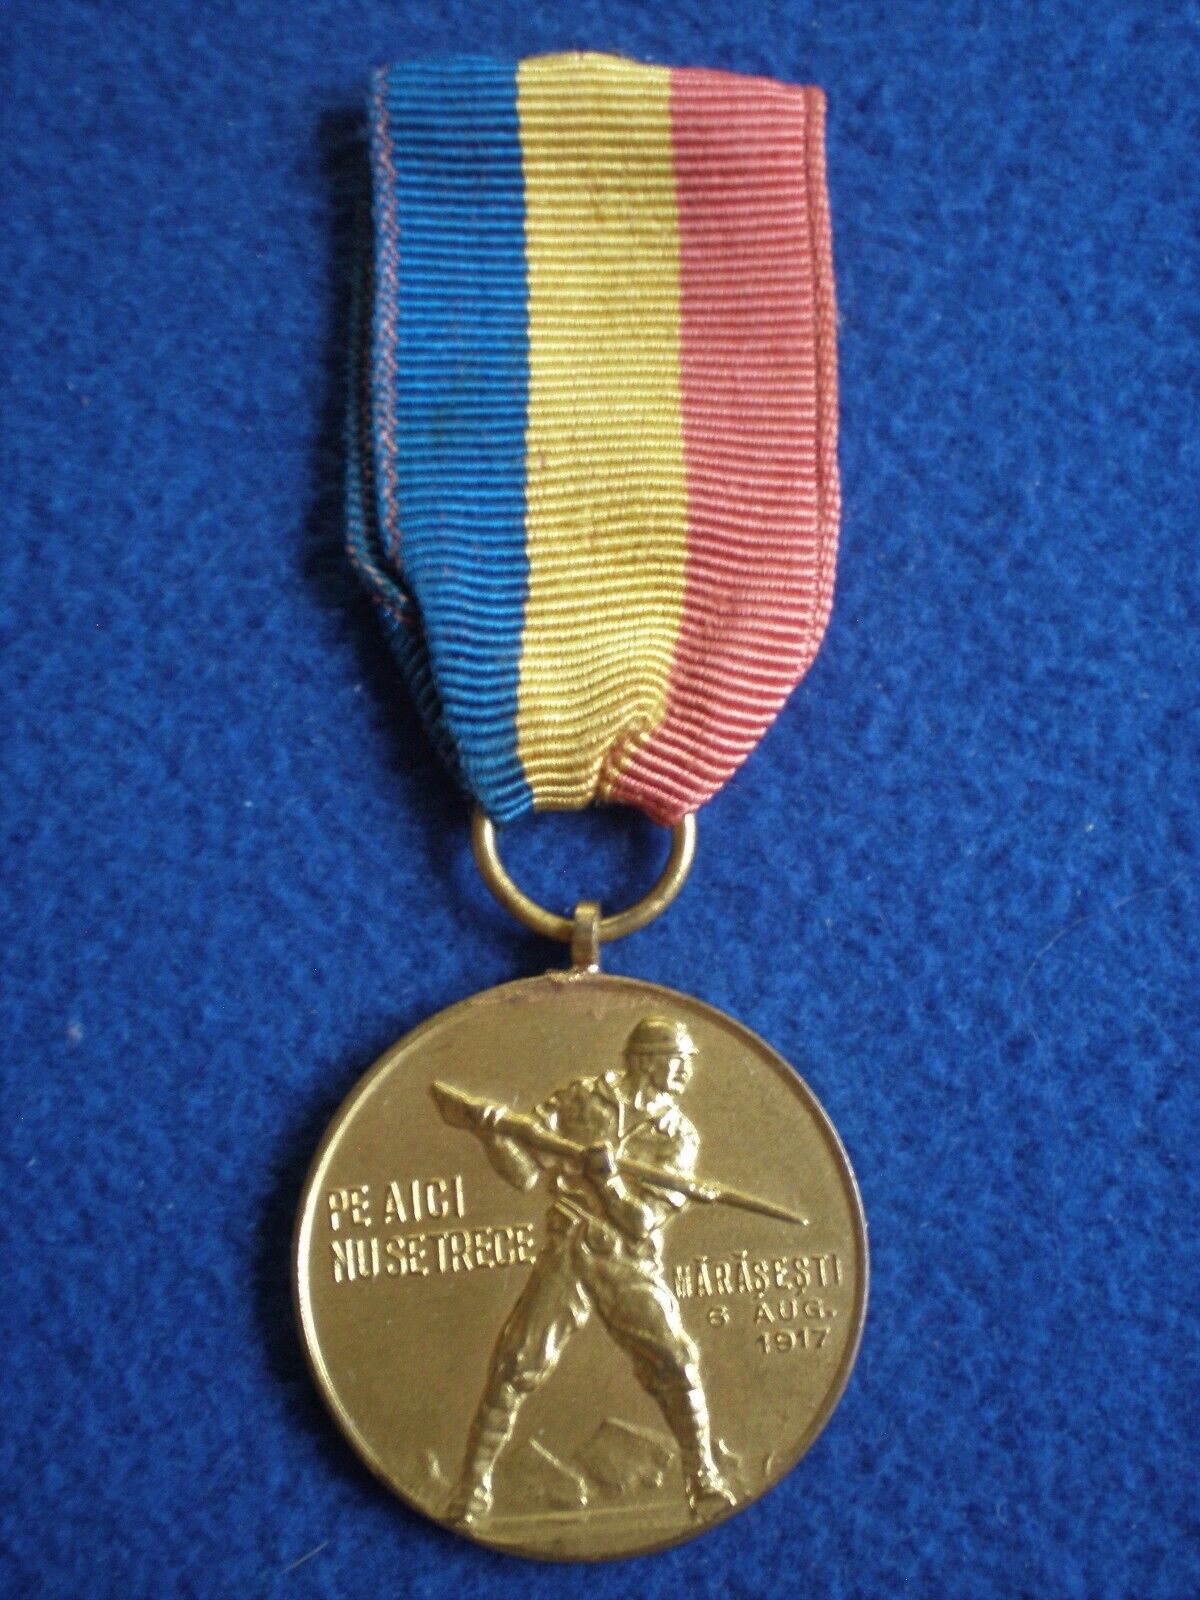 Romania: Commemorative Medal for the Battle of Marasesti 6 August 1917